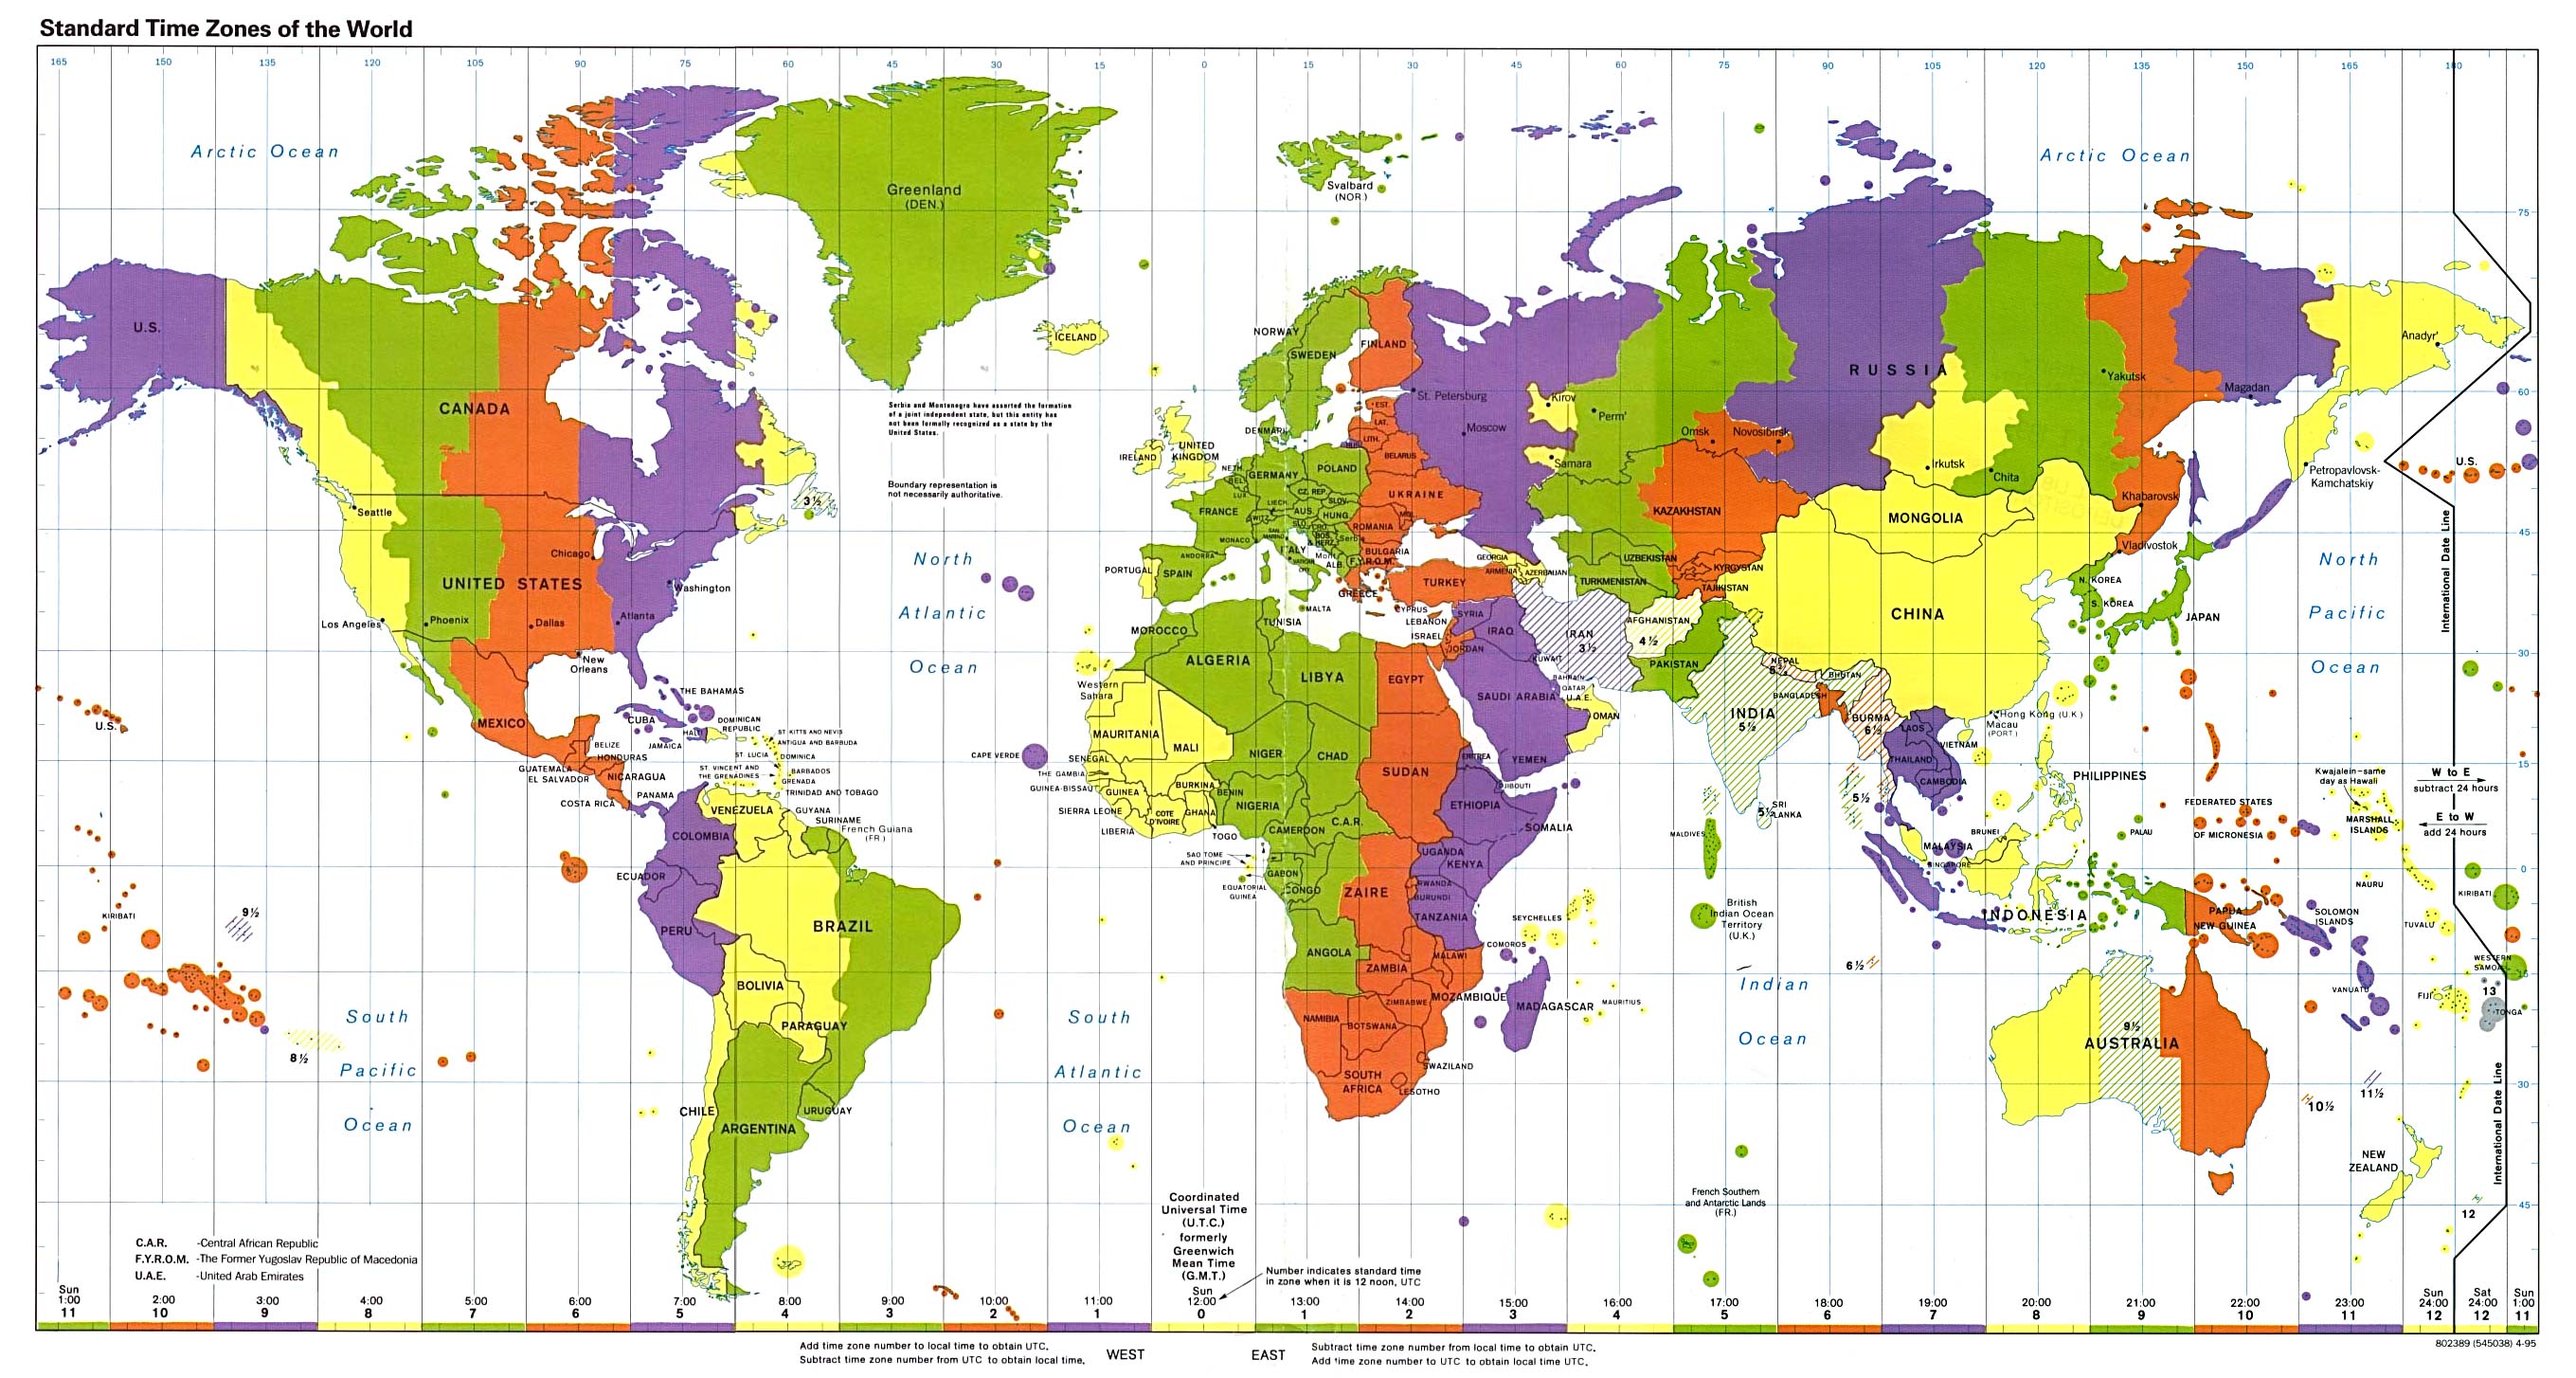 http://www.lib.utexas.edu/maps/world_maps/time_95.jpg